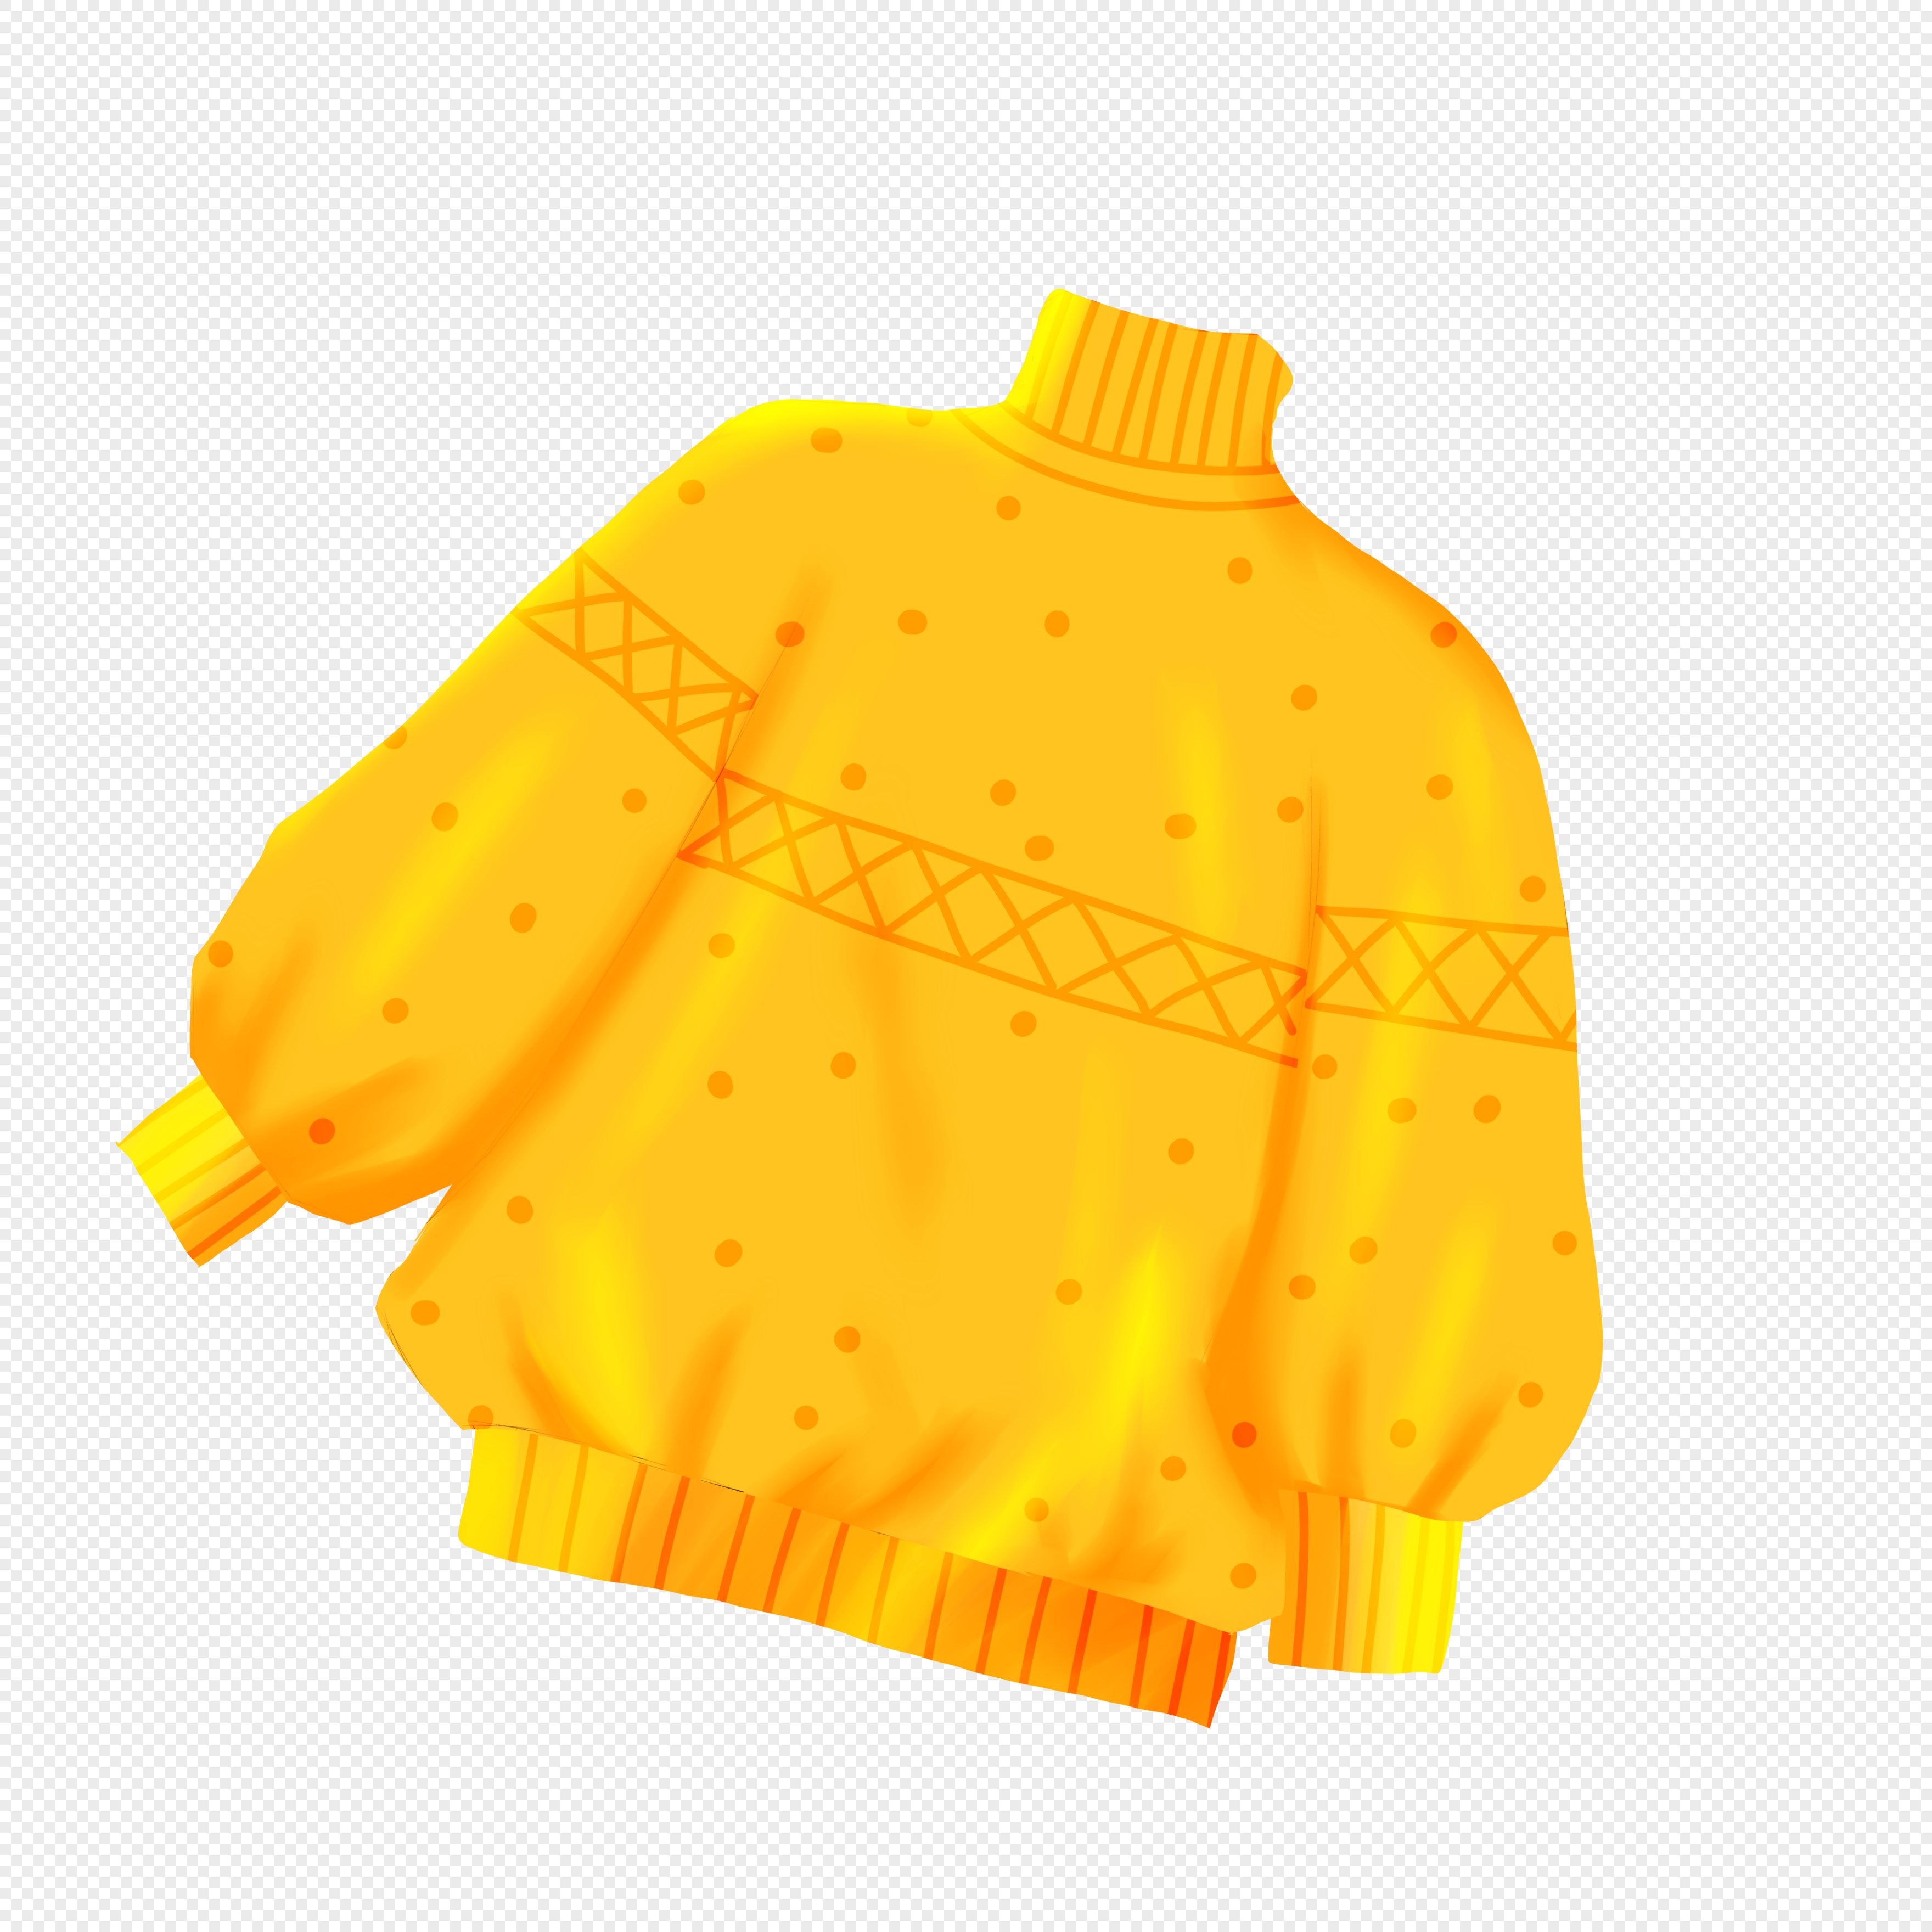 Yellow Sweater Clip Art - Yellow Sweater Image